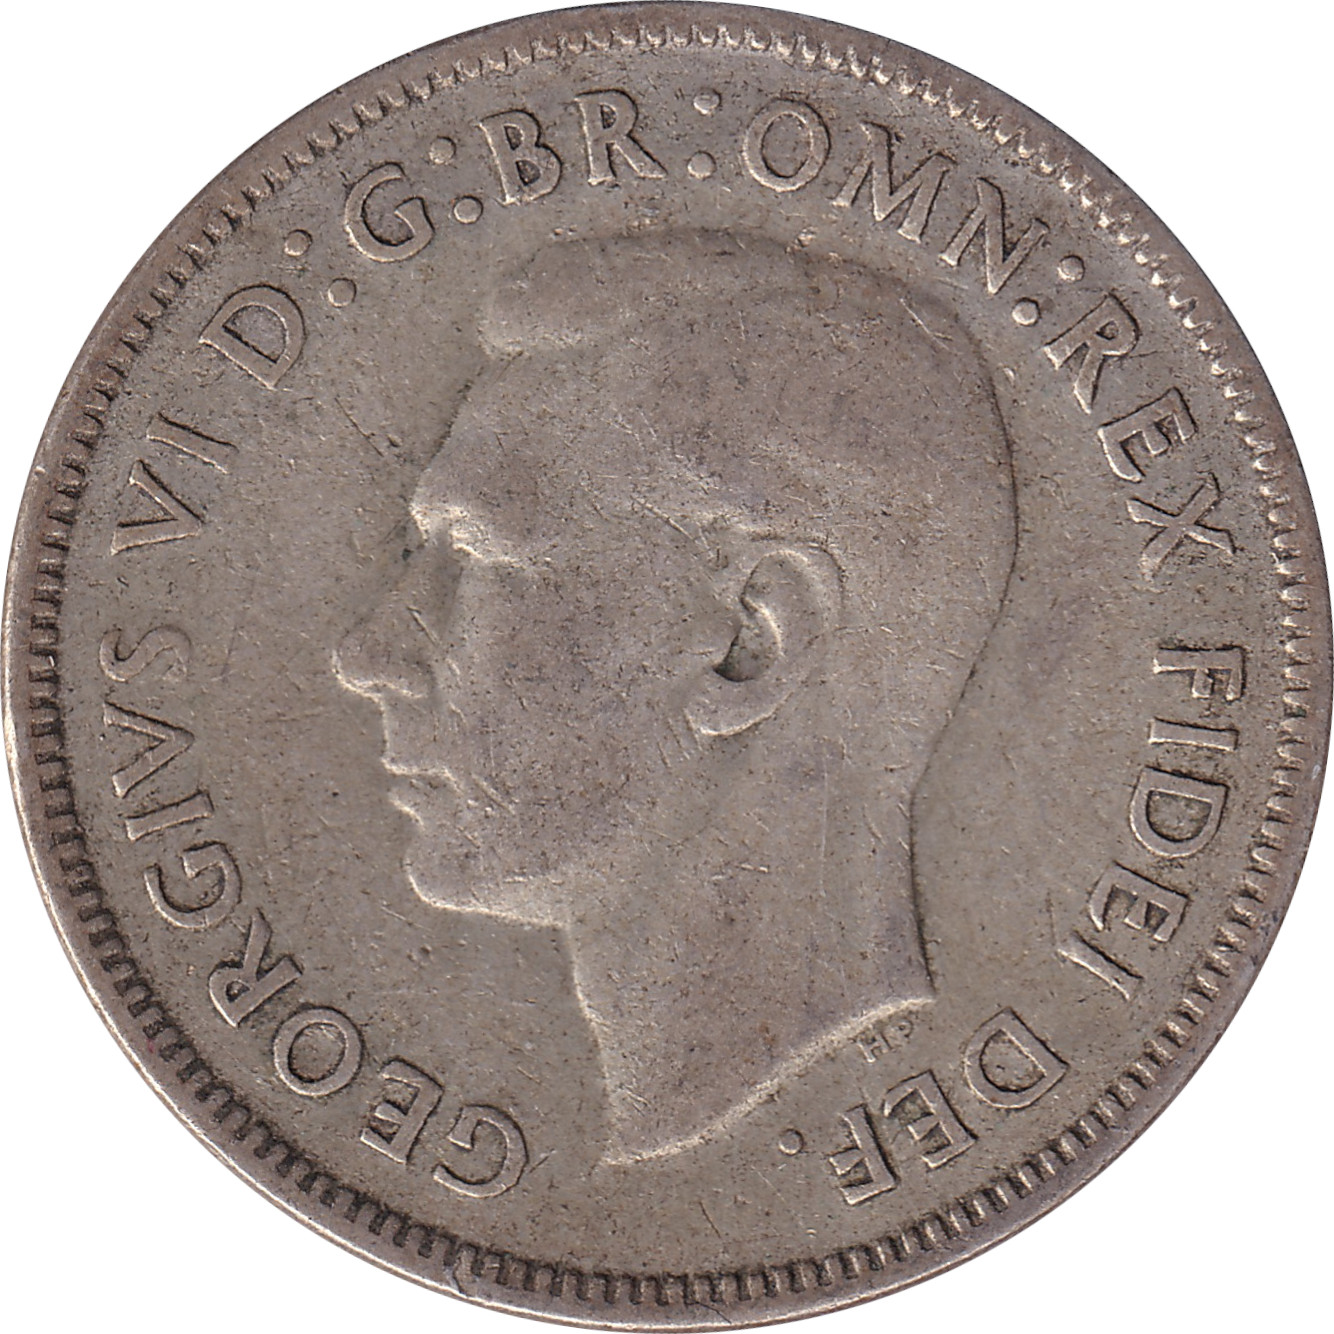 1 florin - George VI